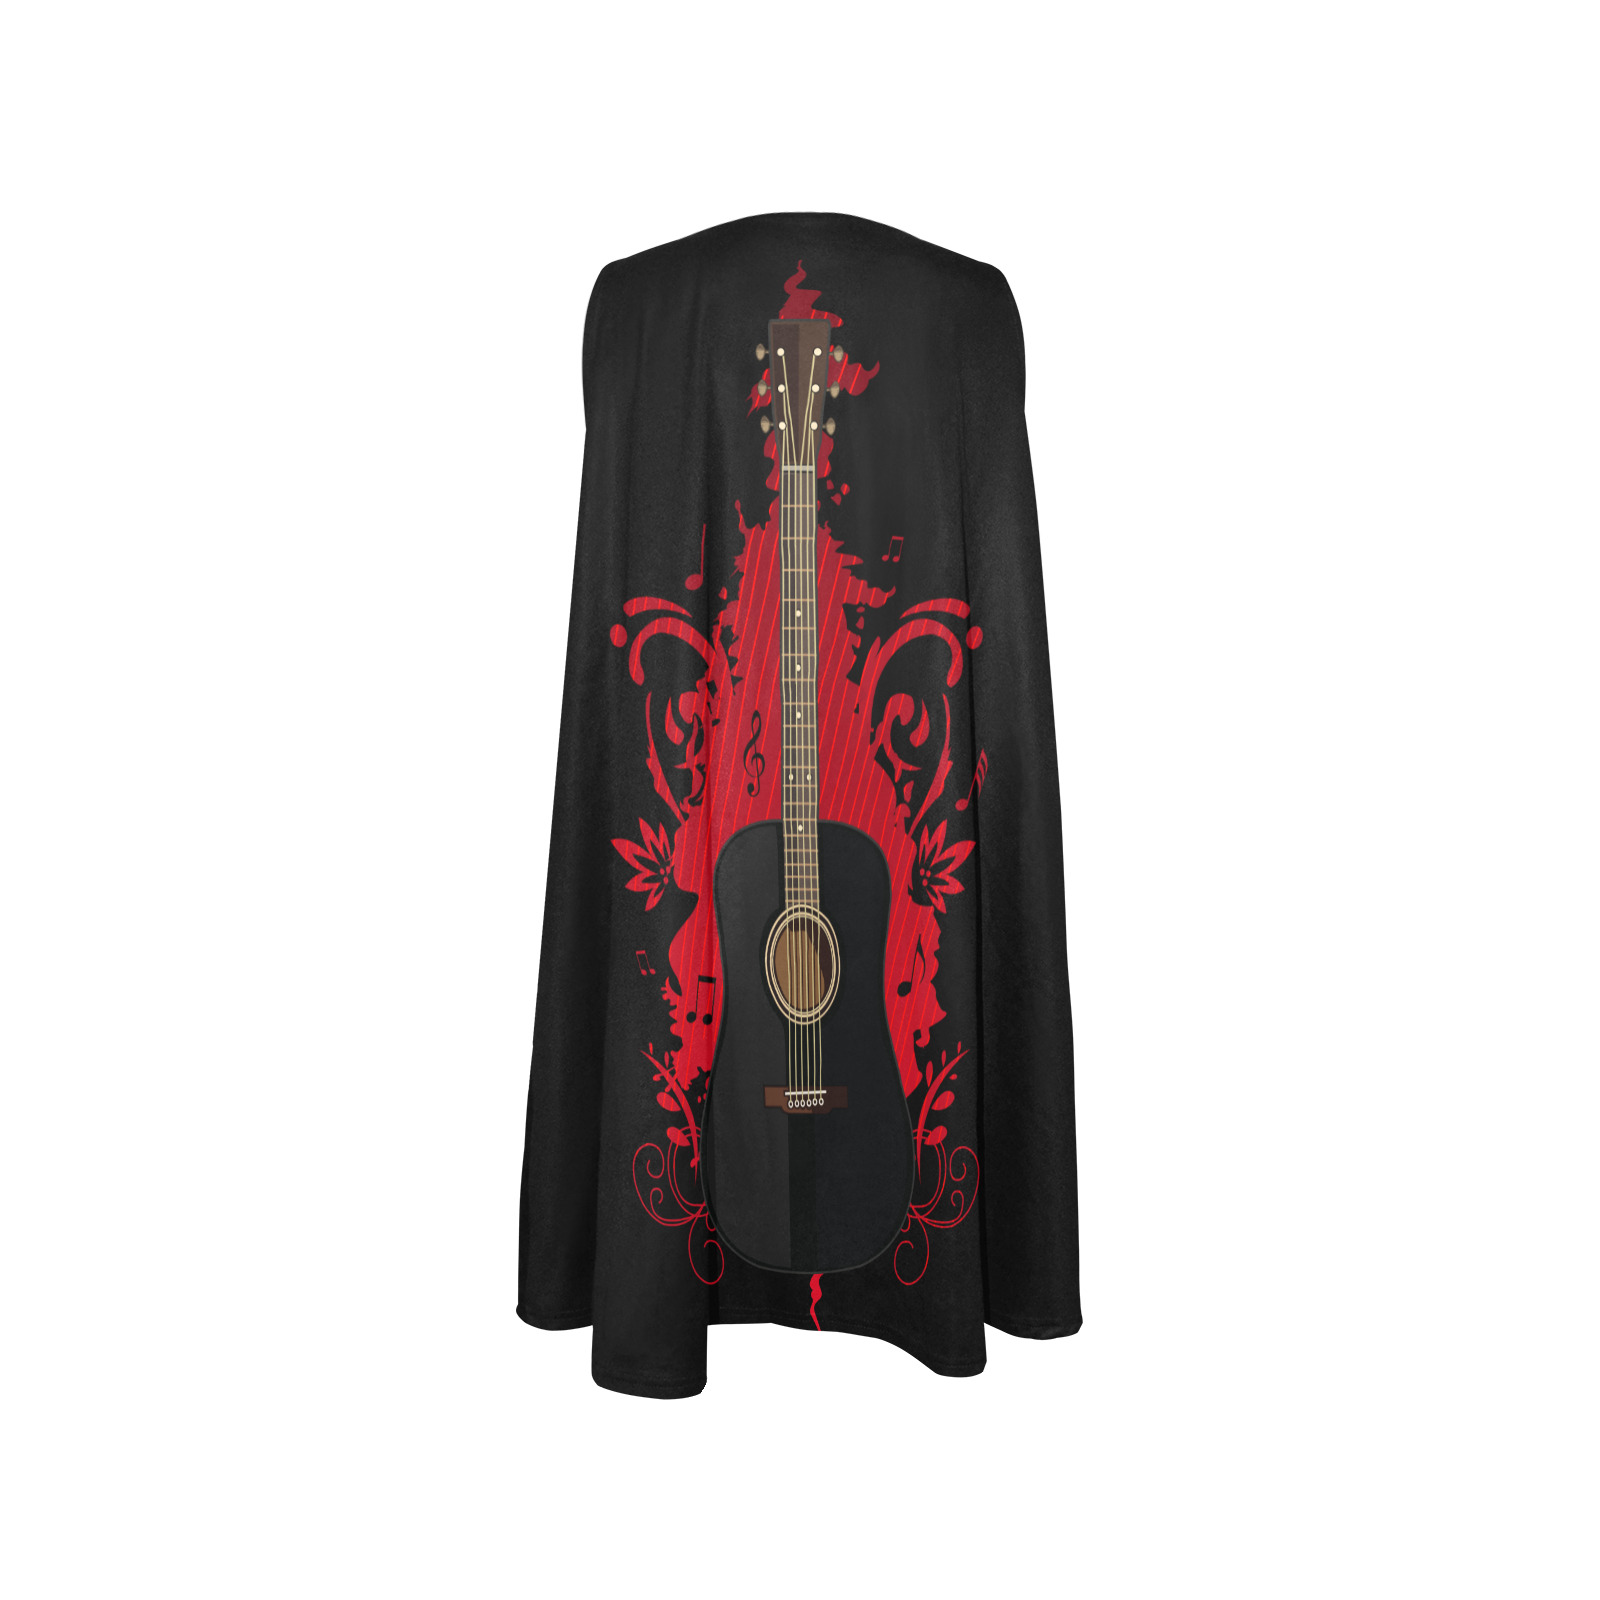 Rad Guitar Sleeveless A-Line Pocket Dress (Model D57)